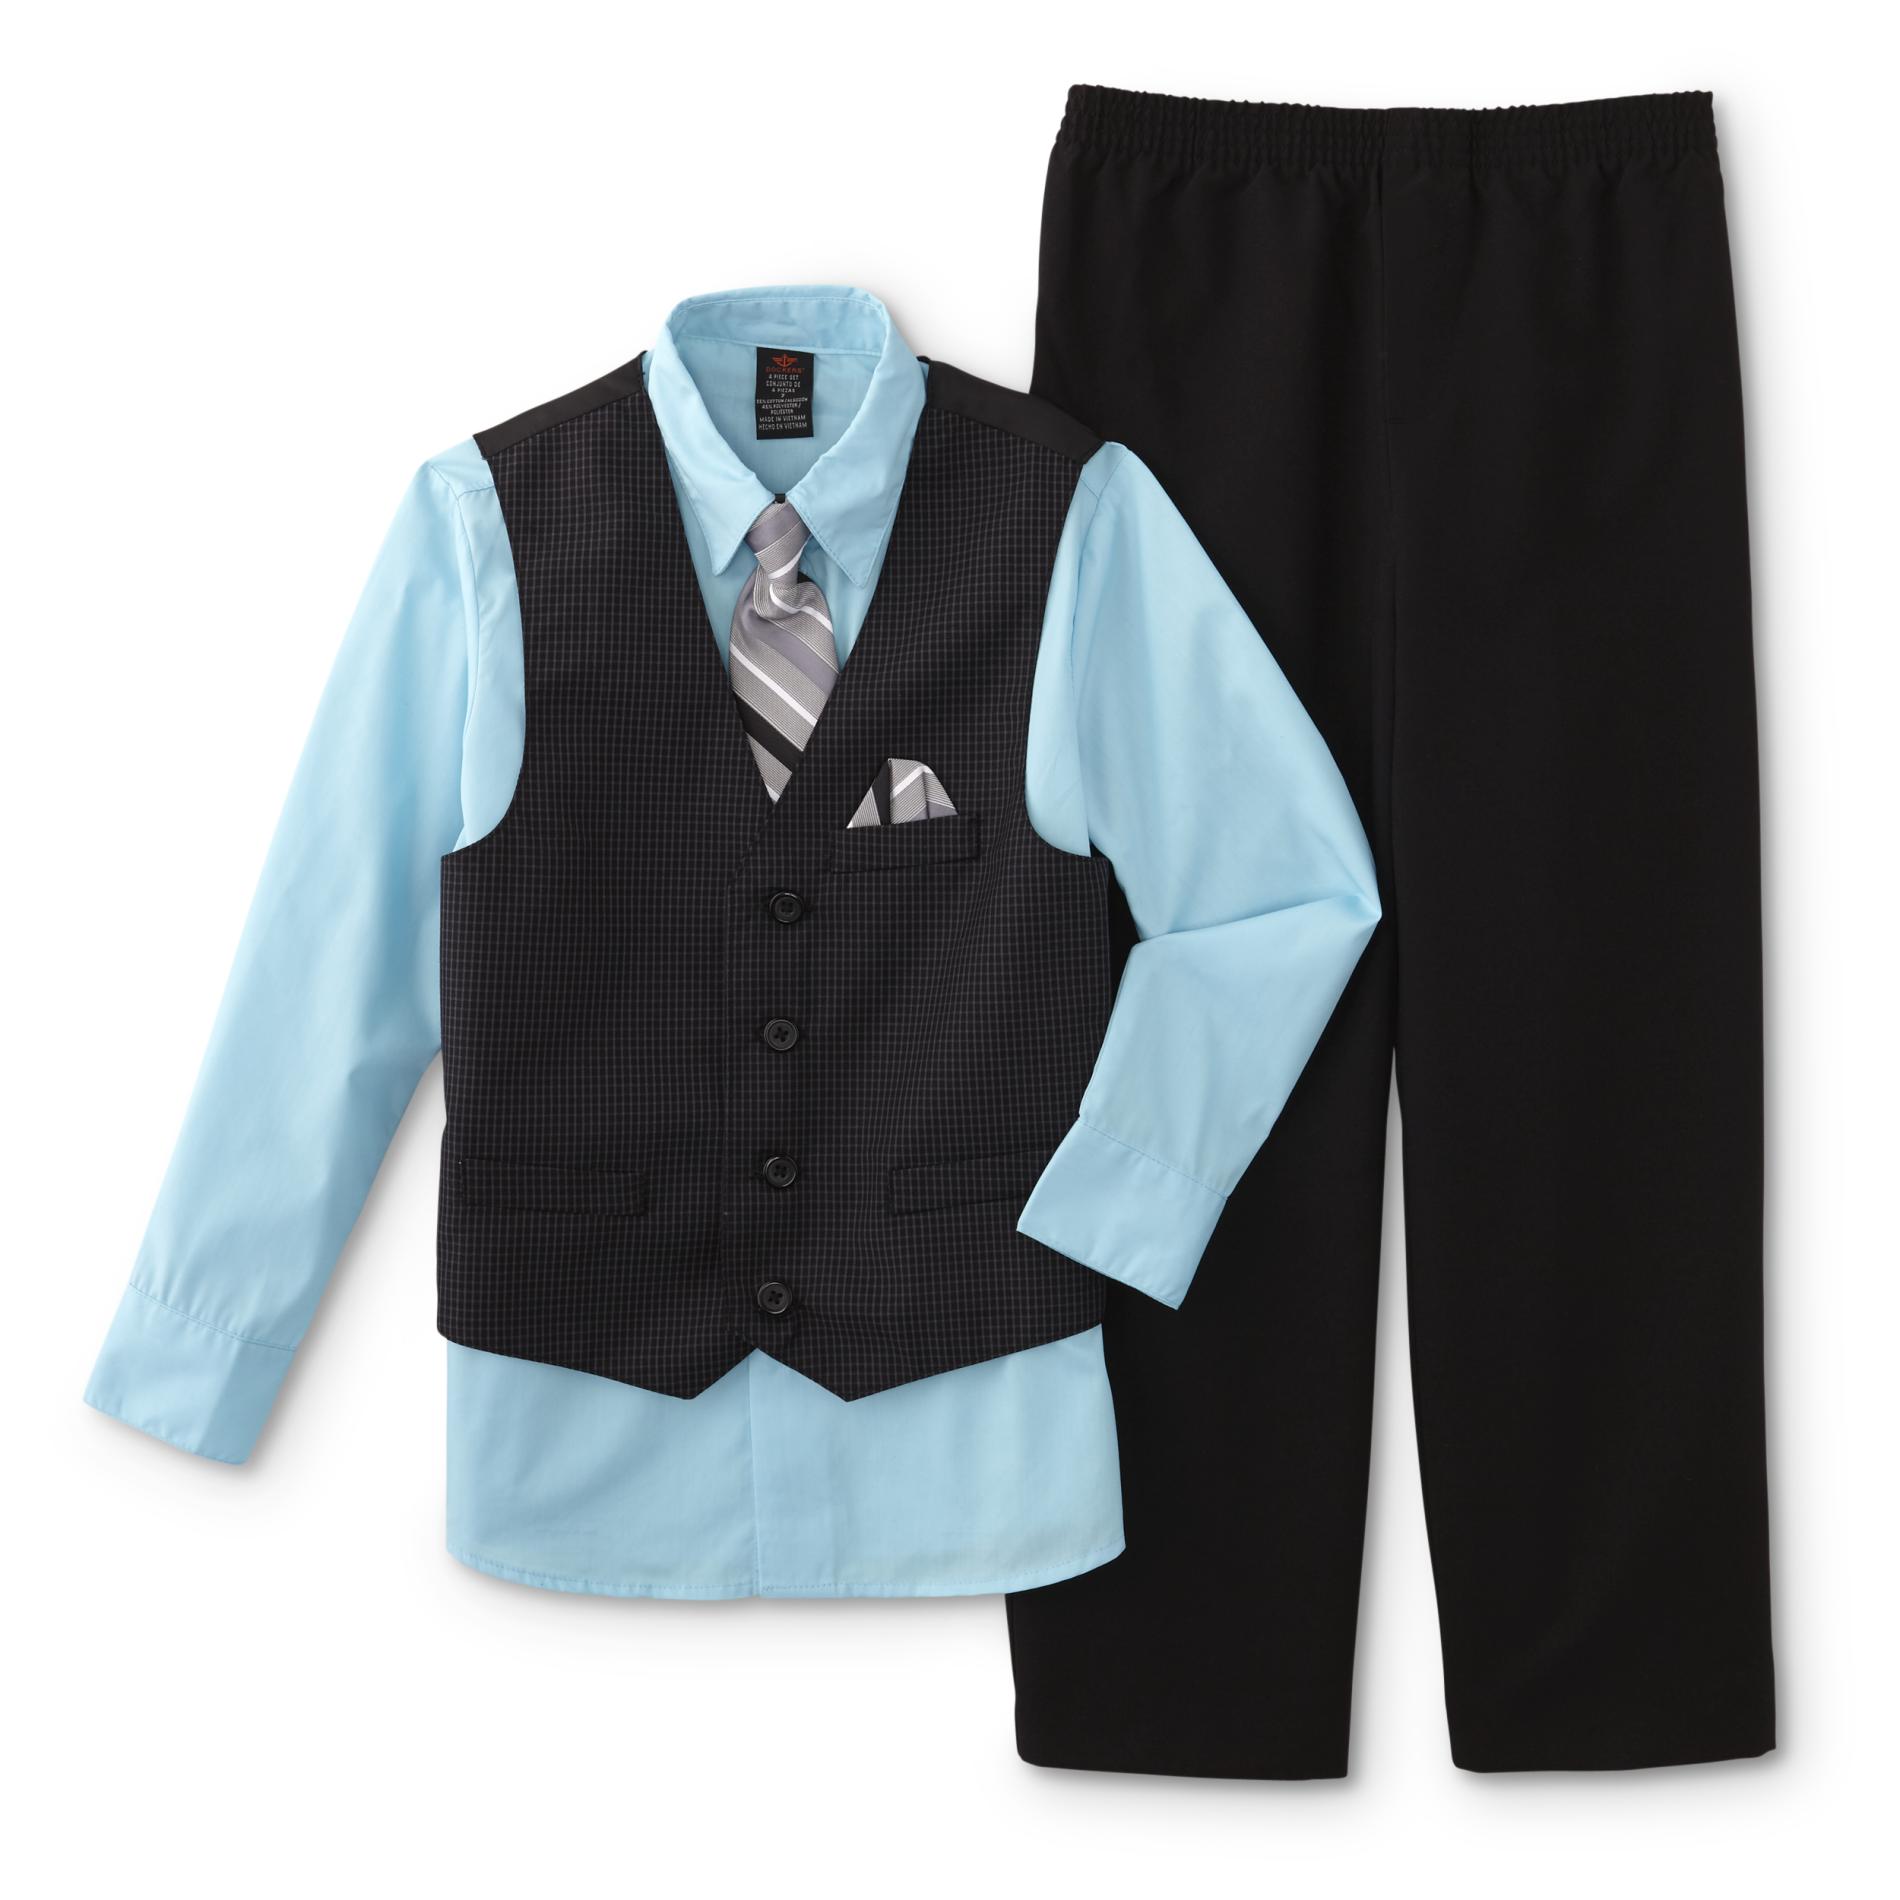 Dockers Infant & Toddler Boys' Necktie, Vest, Dress Shirt & Pants